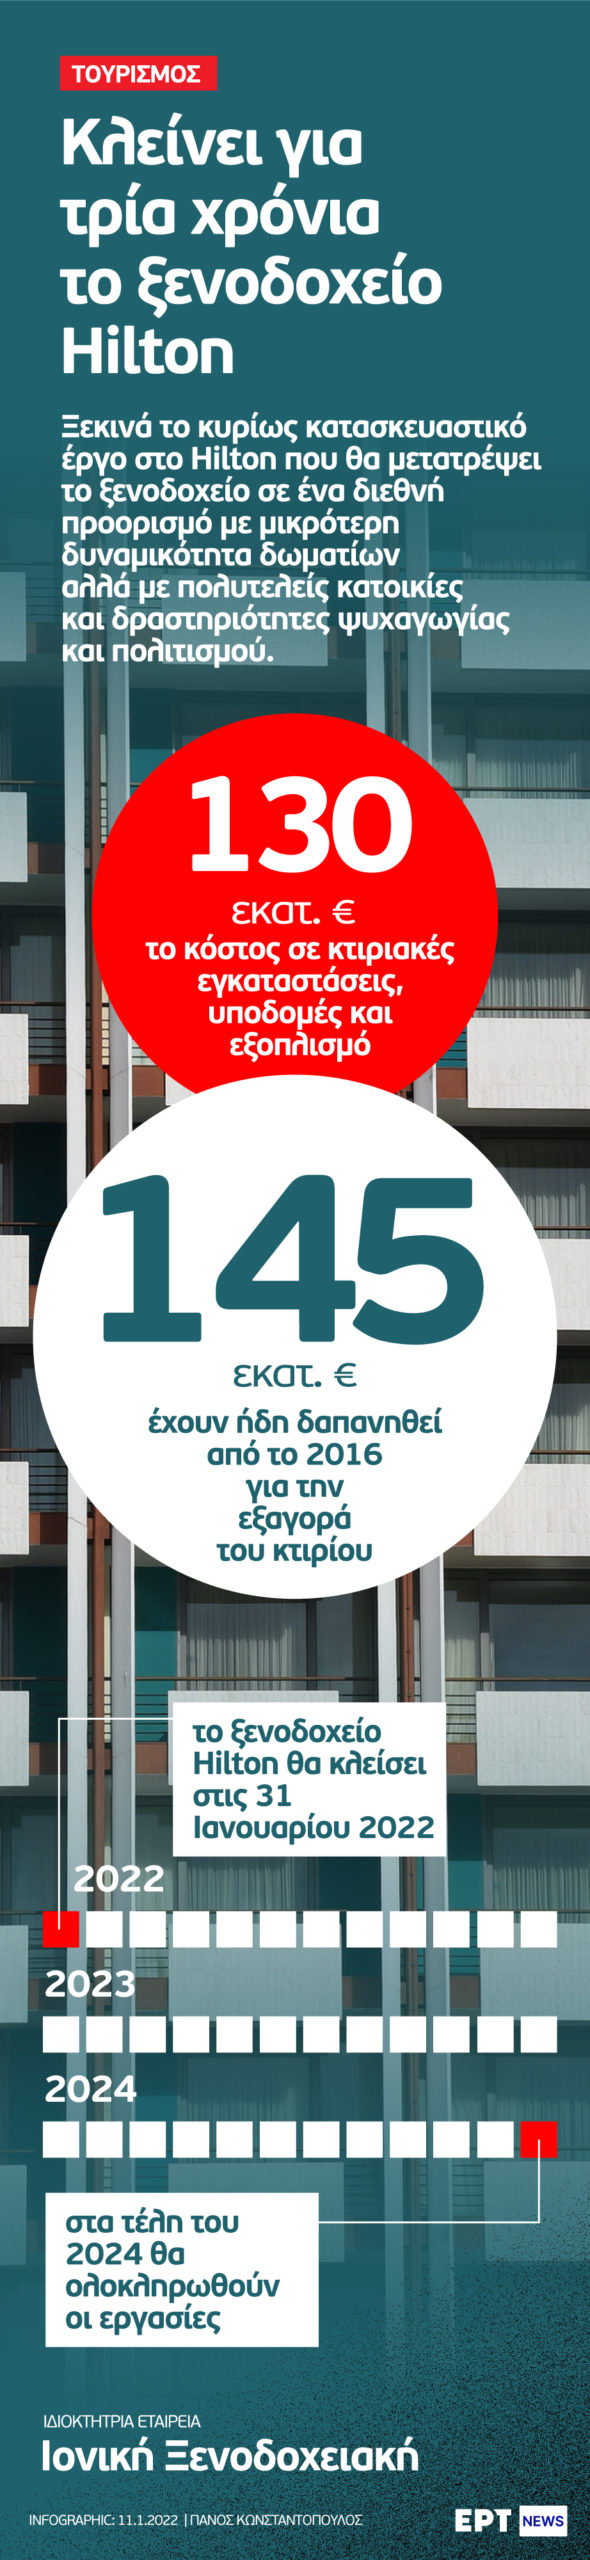 Infographic: Κλείνει για τρία χρόνια το Hilton Αθηνών